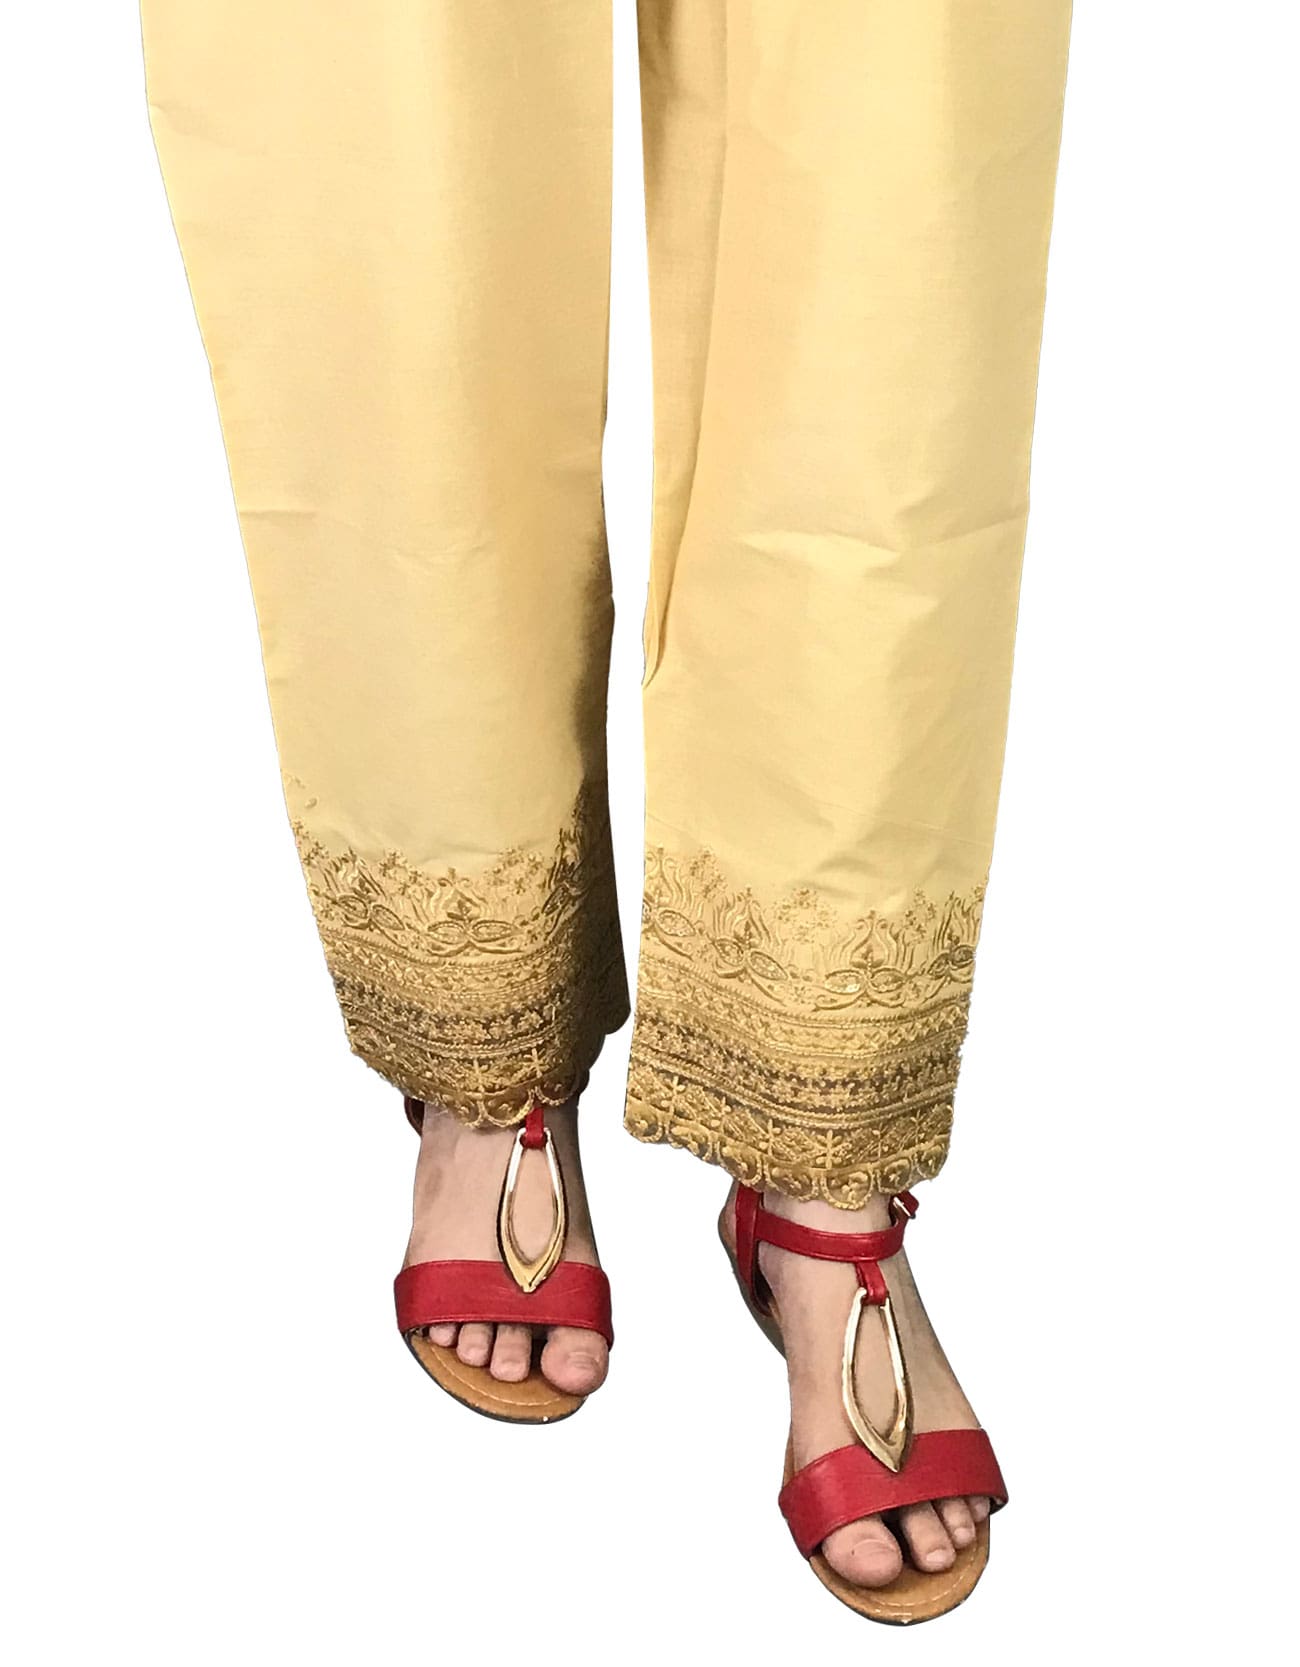 Fashionable pant suits  9 trends 202223  DRESS Magazine